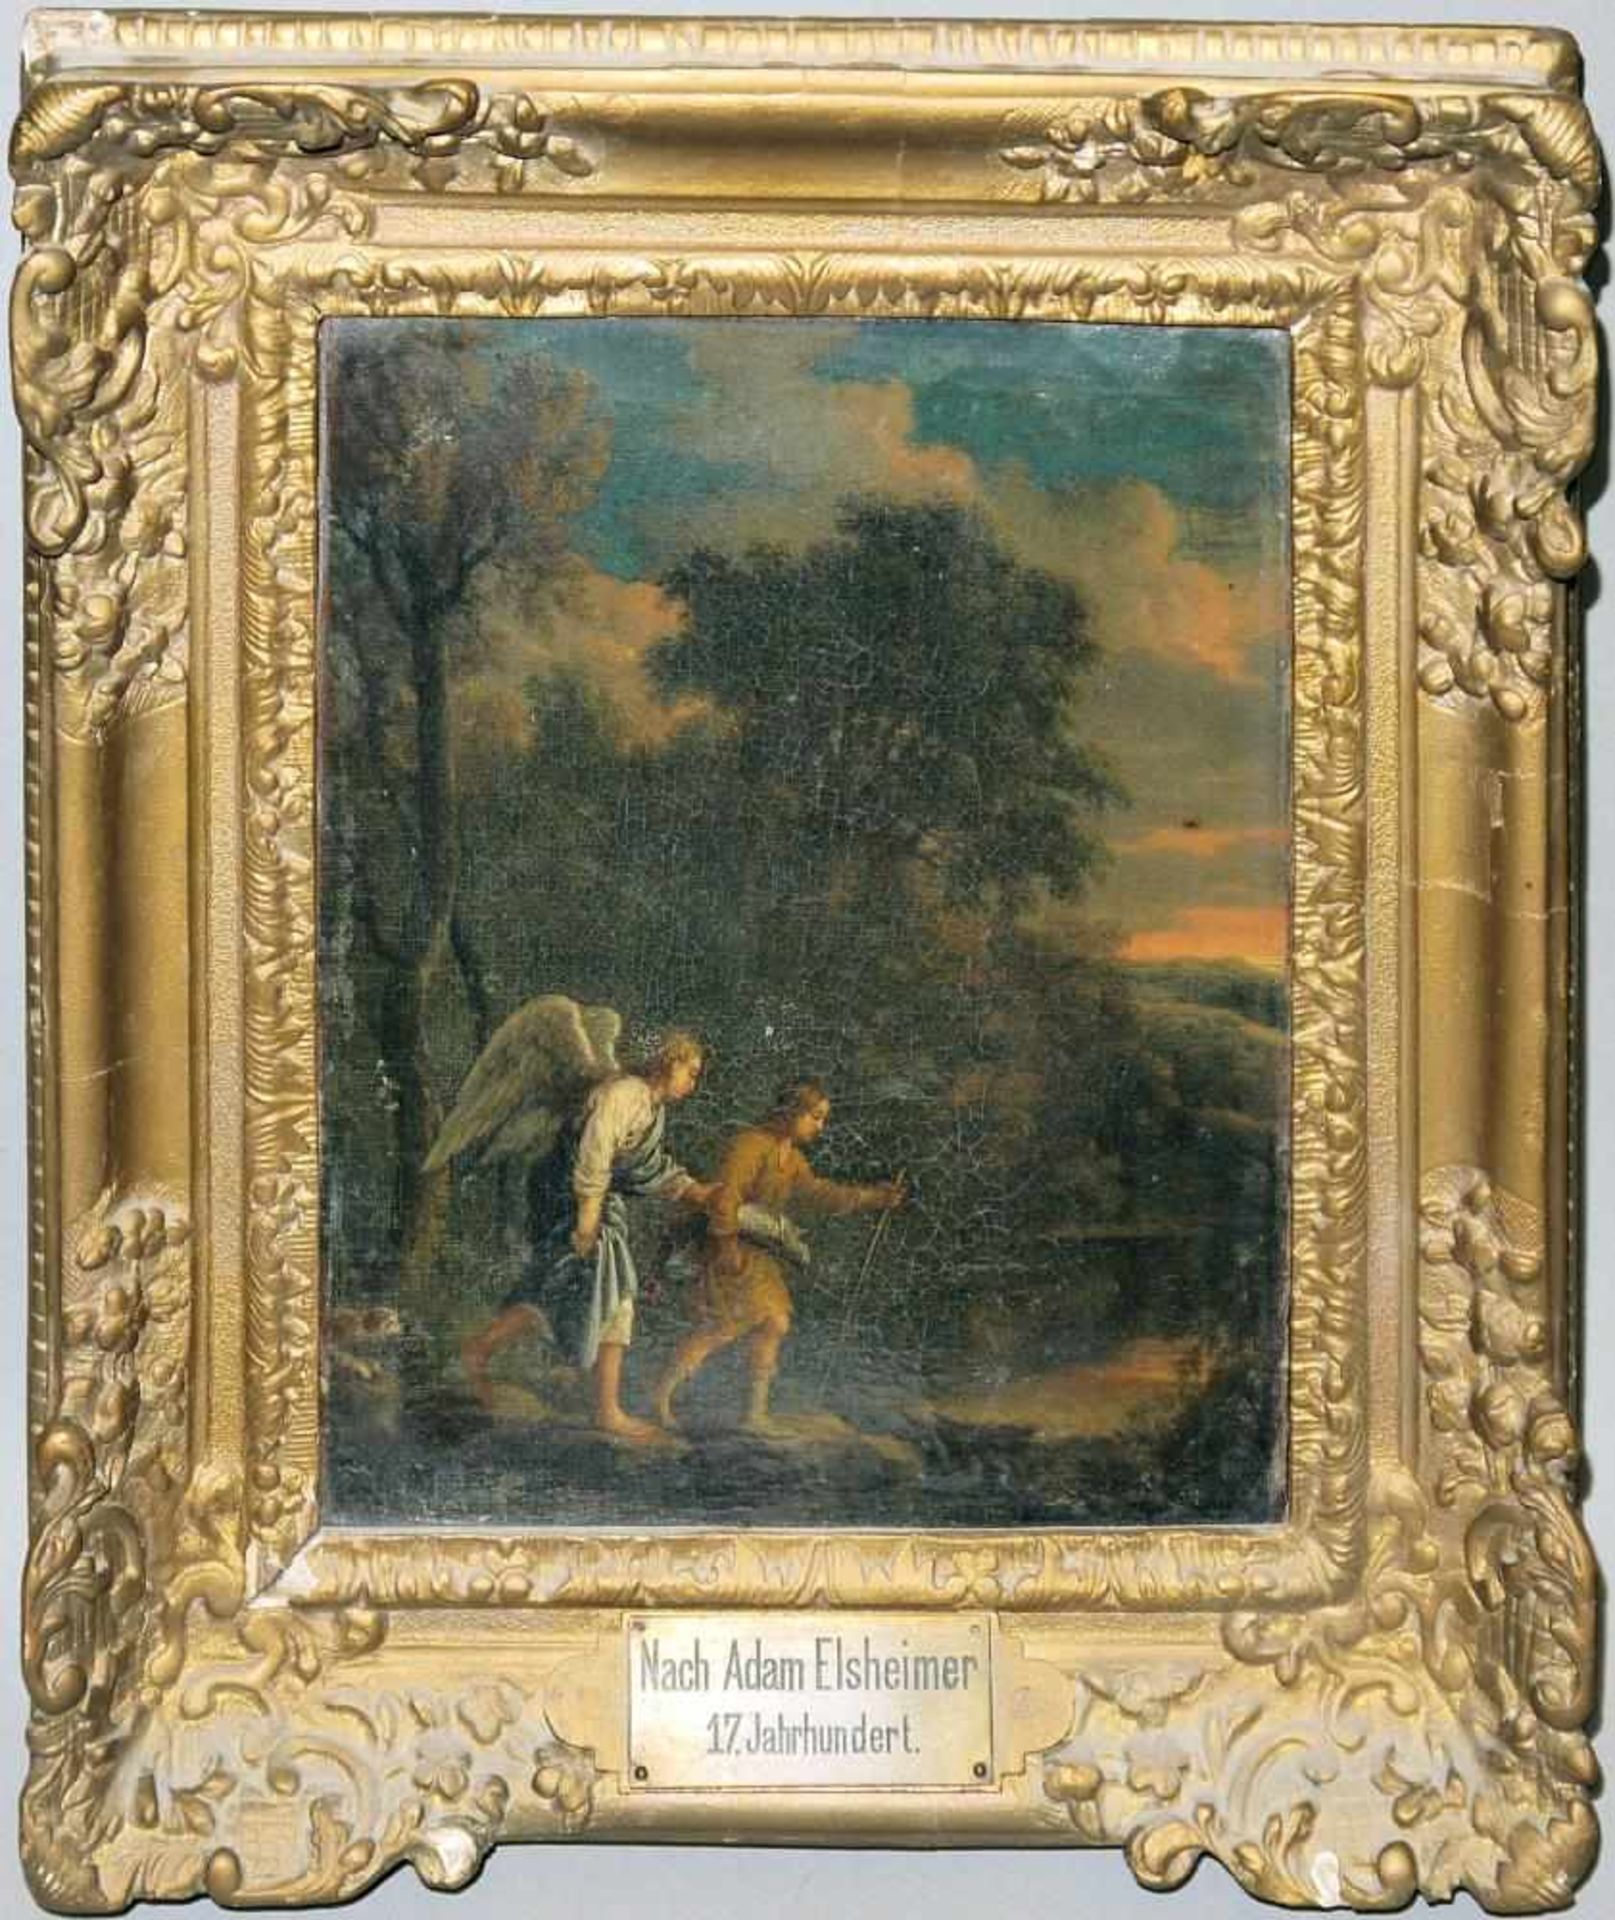 Adam Elsheimer, Variante nach, Tobias mit dem Engel, Ölgemälde um 1700, Goldstuckrahmen d. 19. Jh.